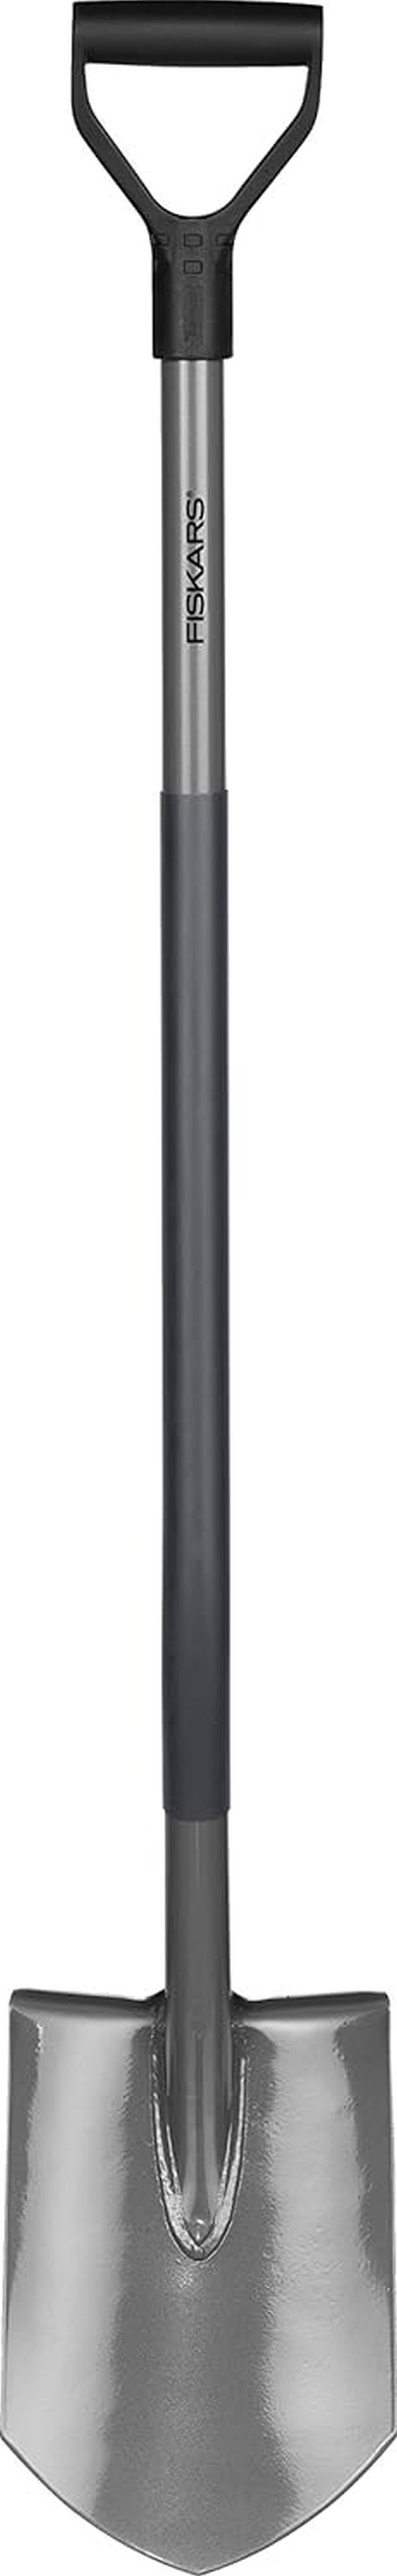 Fiskars Ergonomic Rýč špičatý, délka: 125 cm (131410) 1025374, 1067511